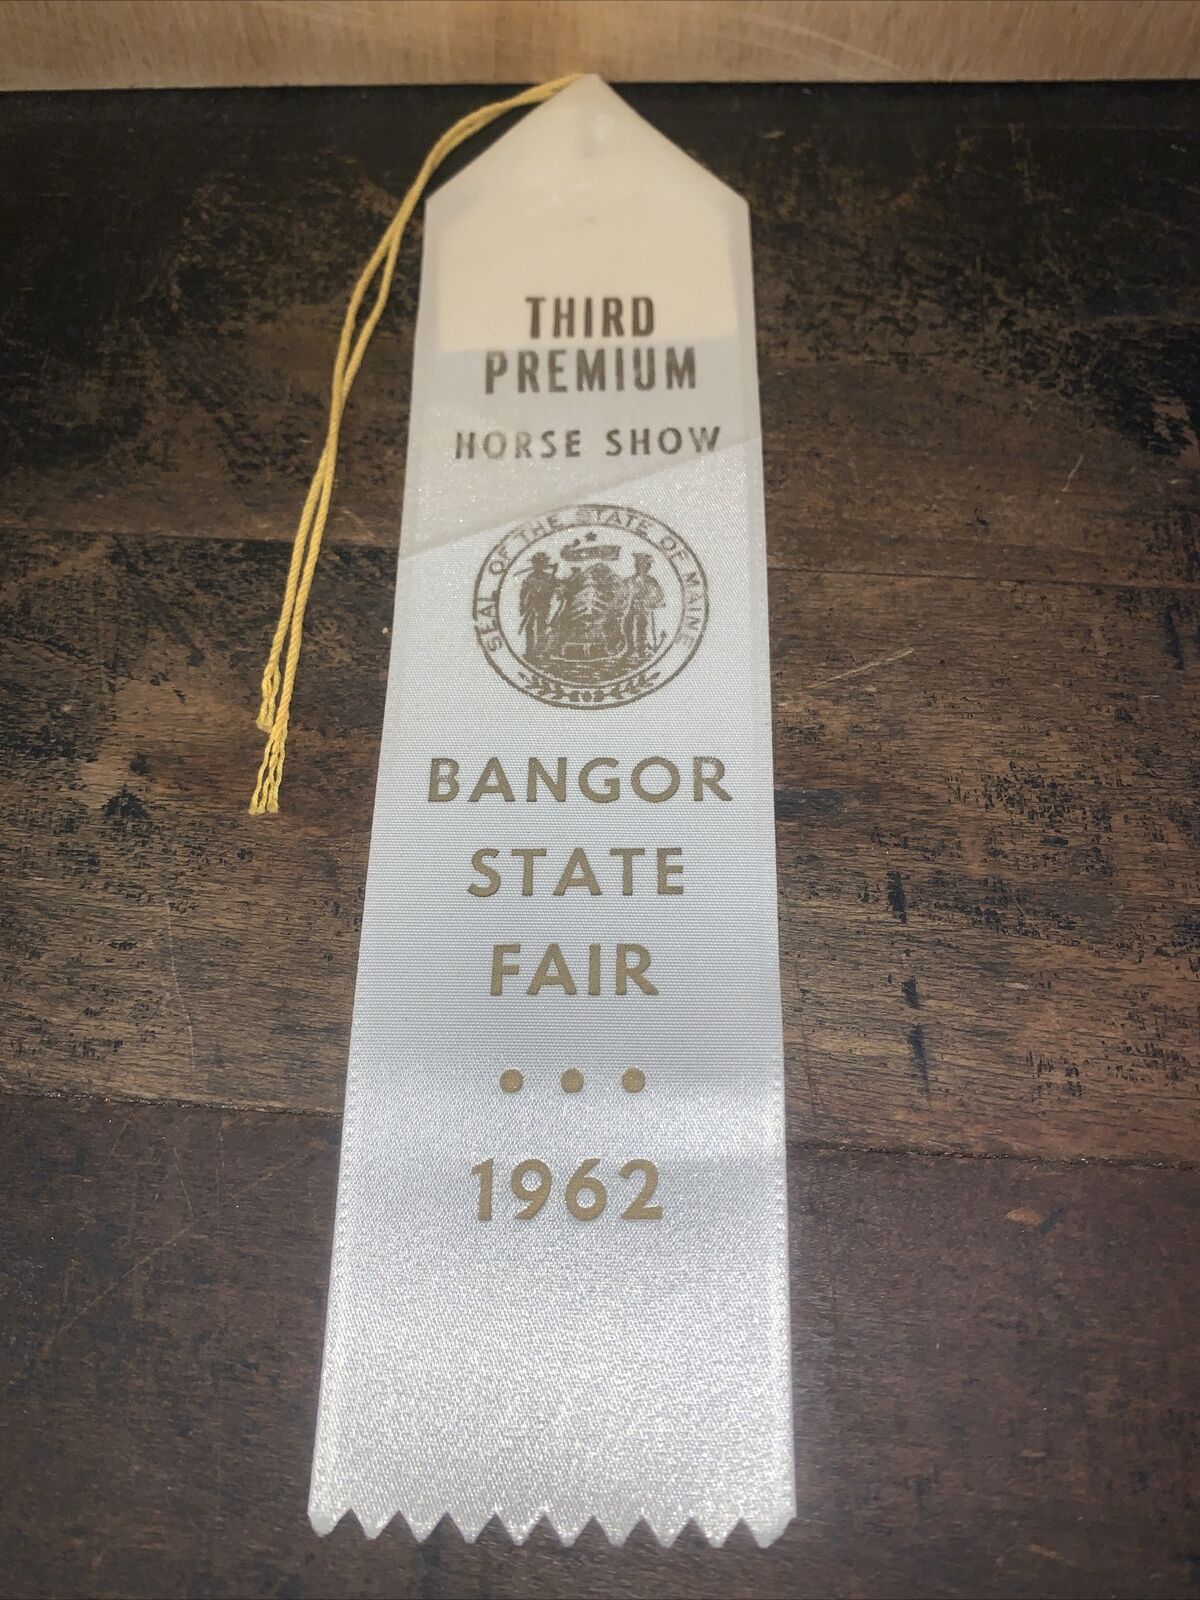 Bangor State Fair Horse Show Ribbon 1962. Novice Jumping Third Premium.￼